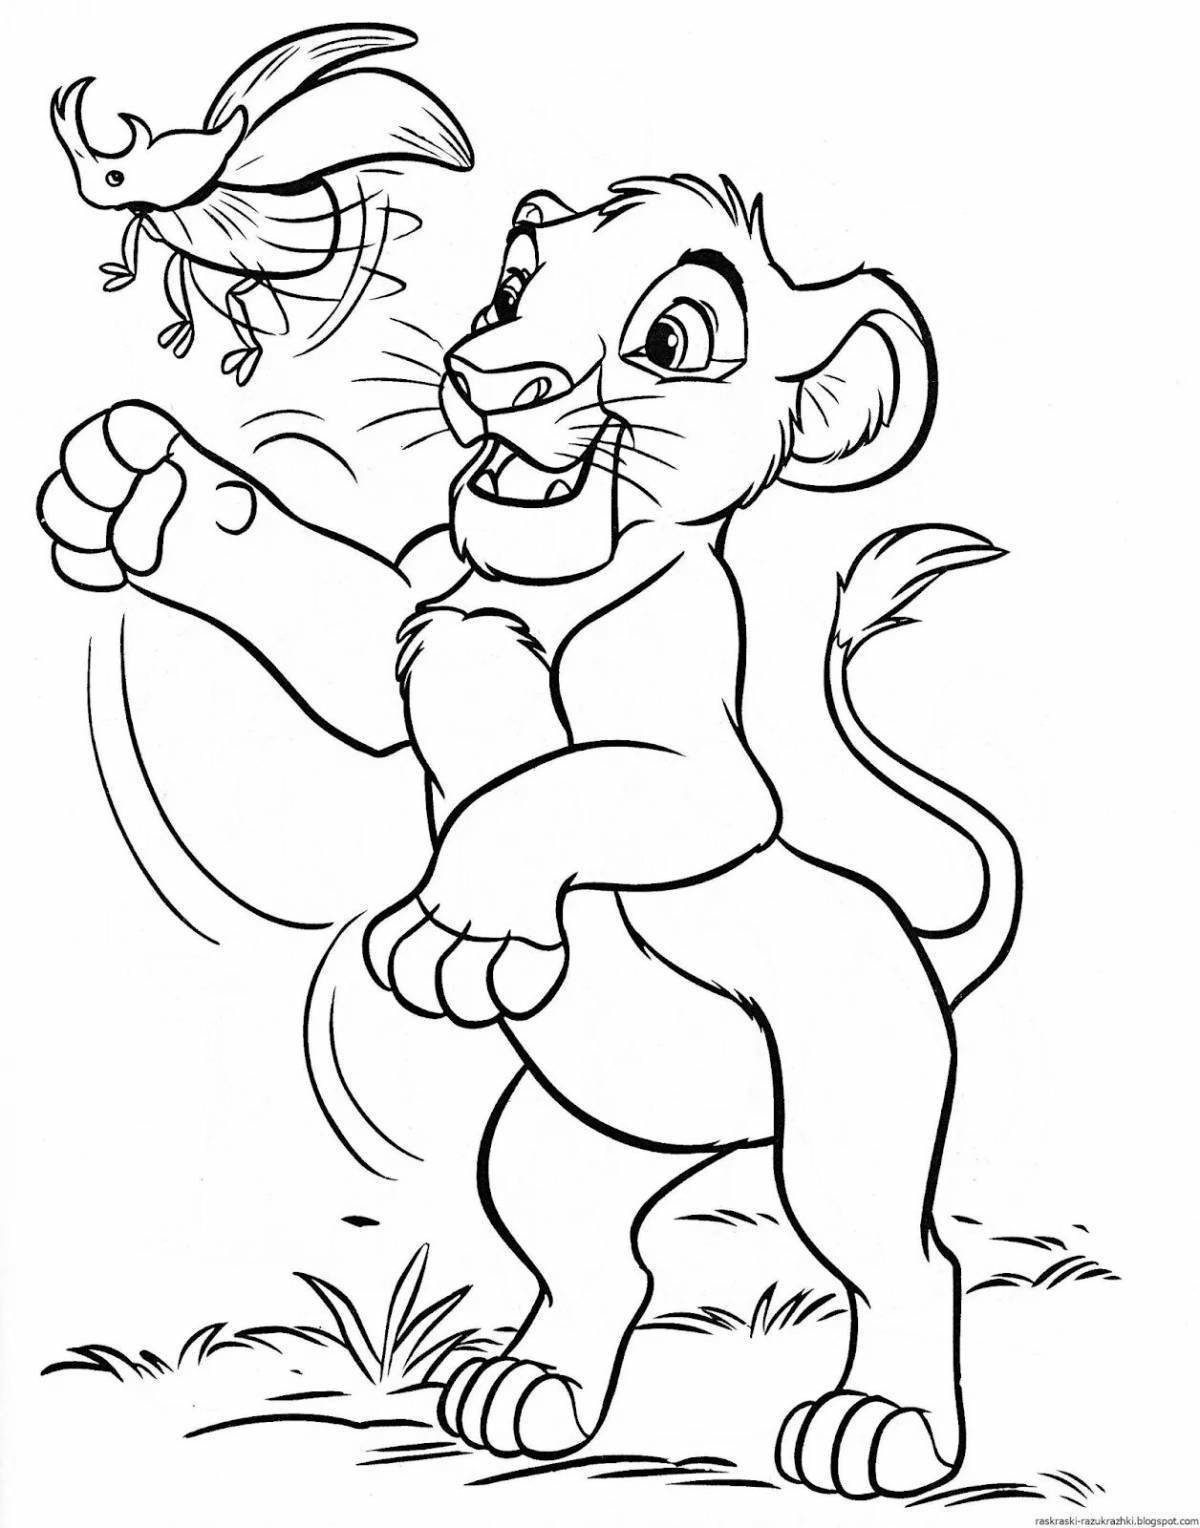 Simba fun coloring for kids